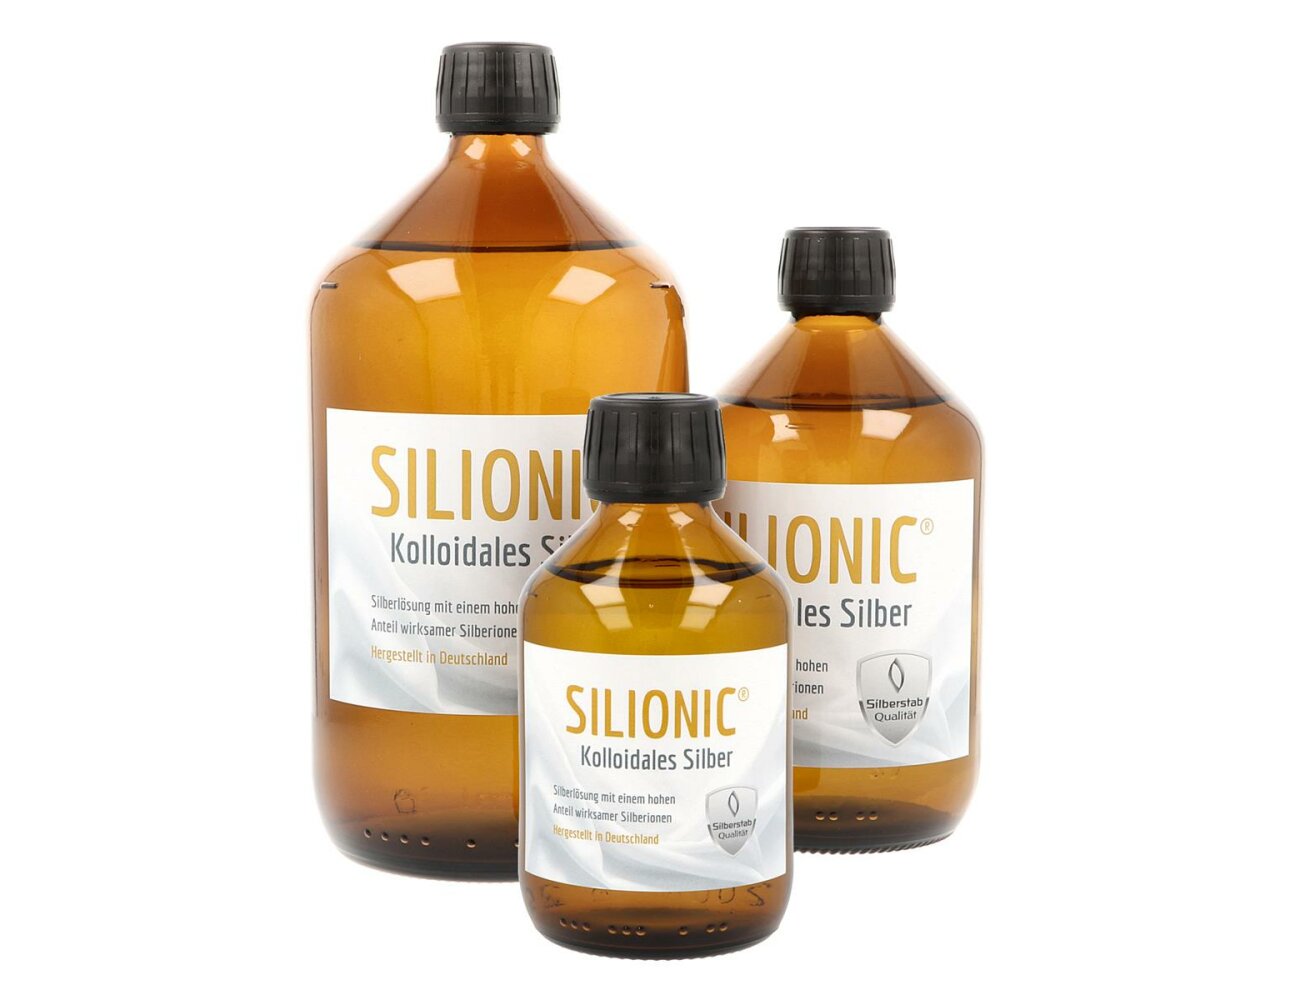 Silionic Kolloidales Silber 10 ppm